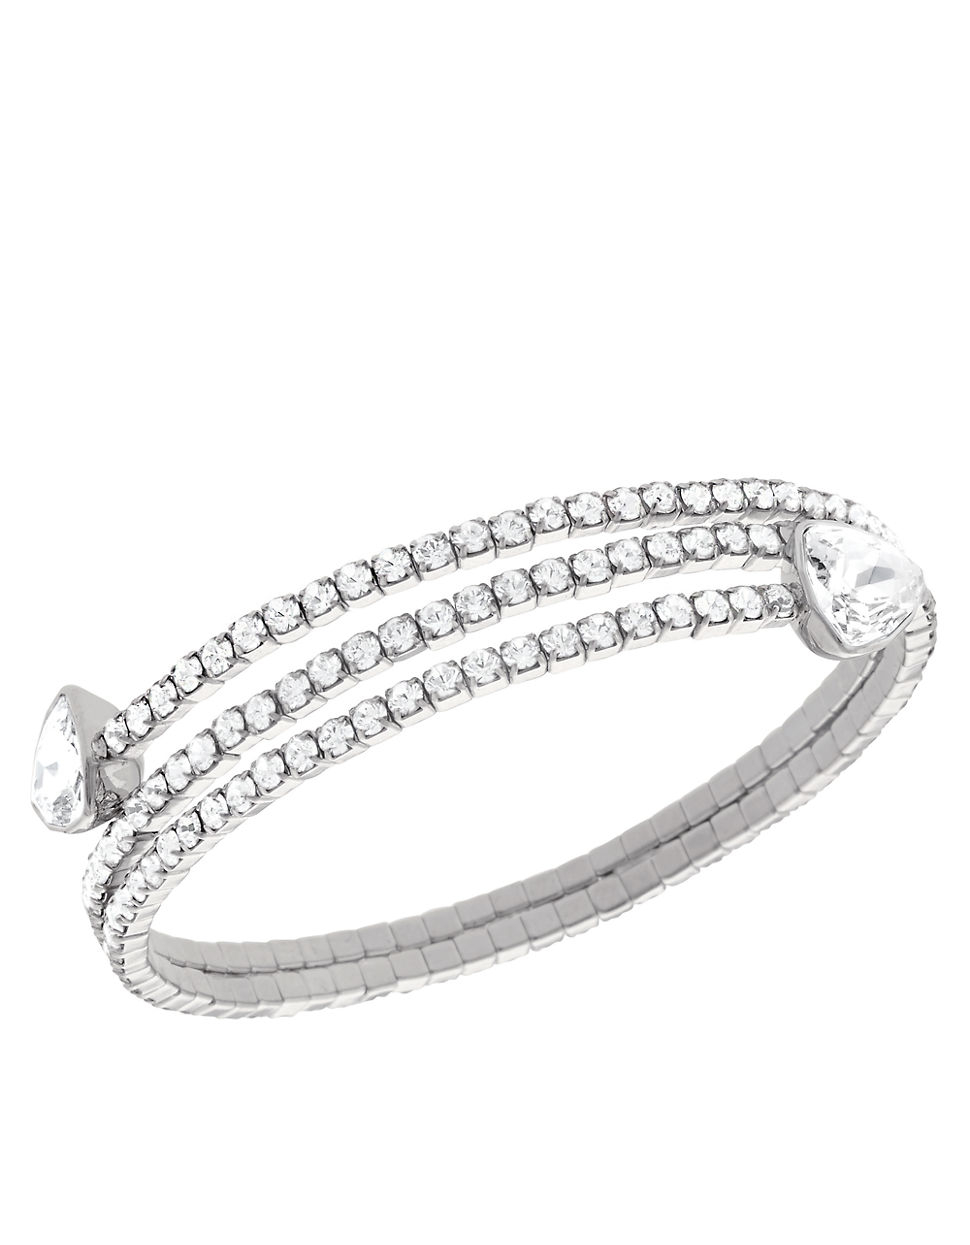 Swarovski Silvertone And Crystal Twisted Bangle Bracelet in Metallic